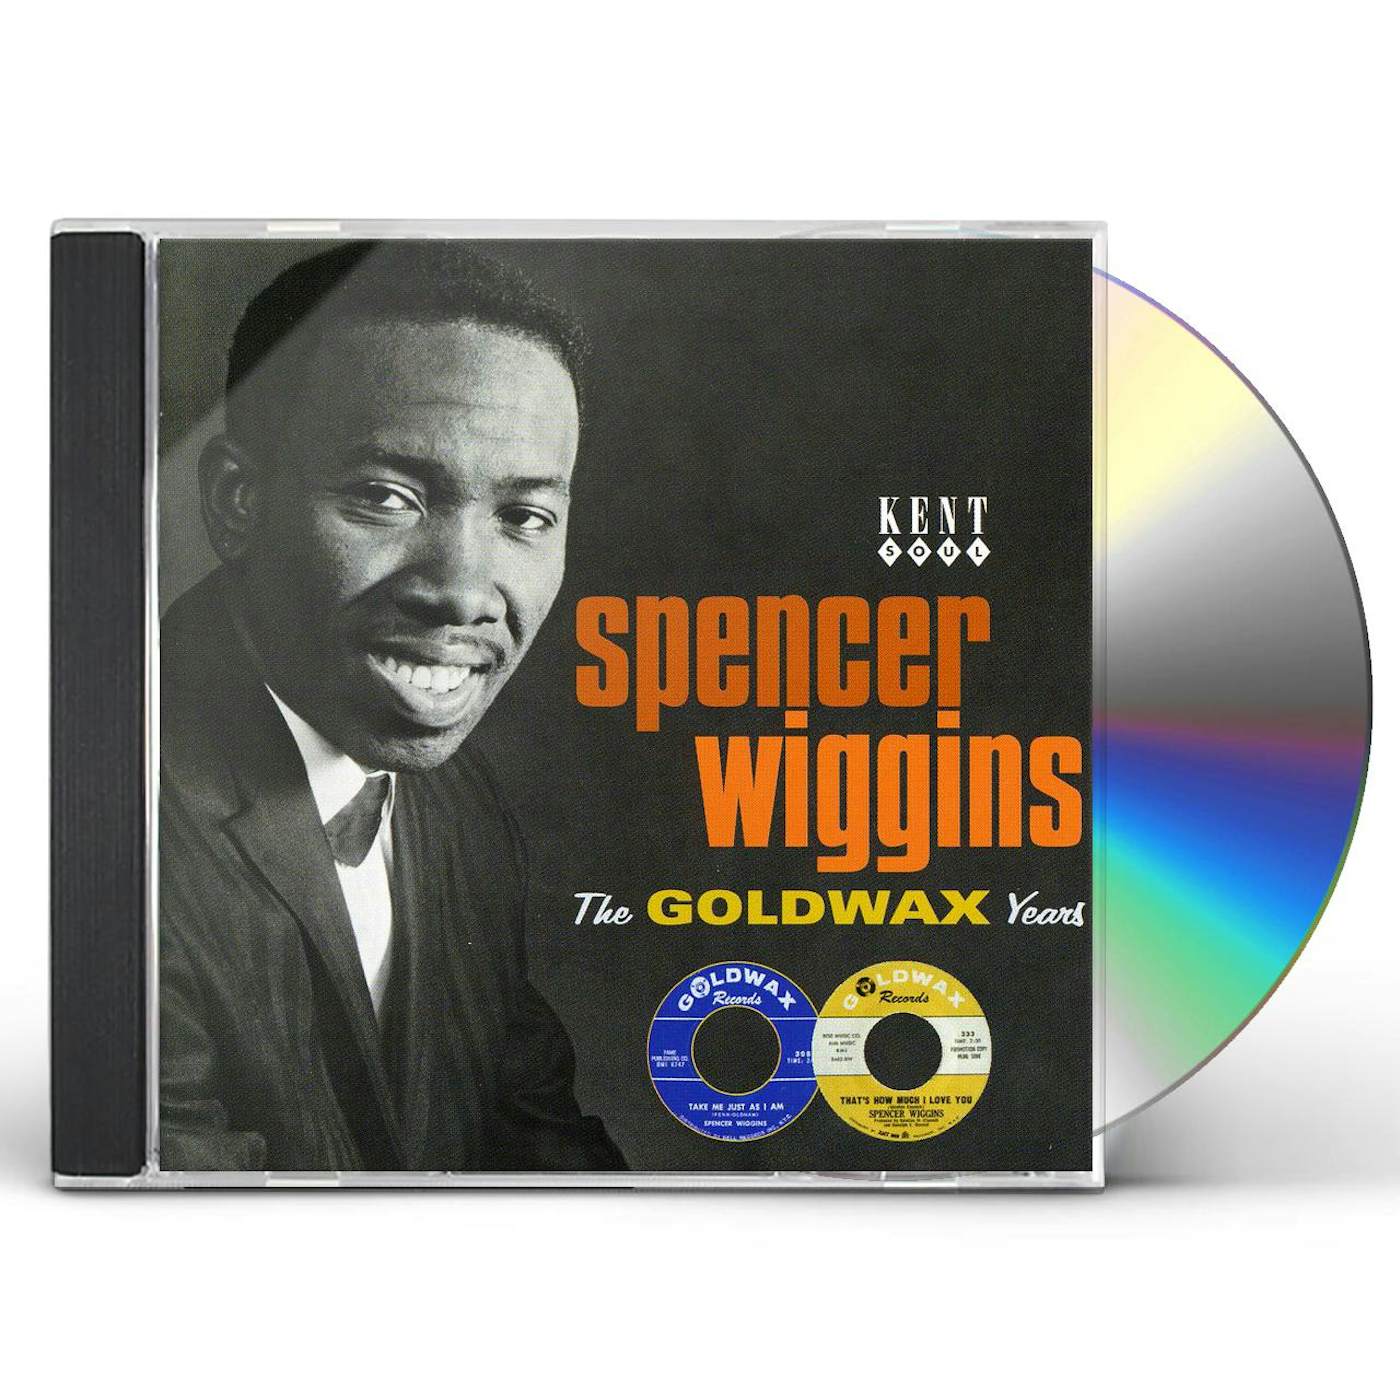 Spencer Wiggins GOLDWAX YEARS CD